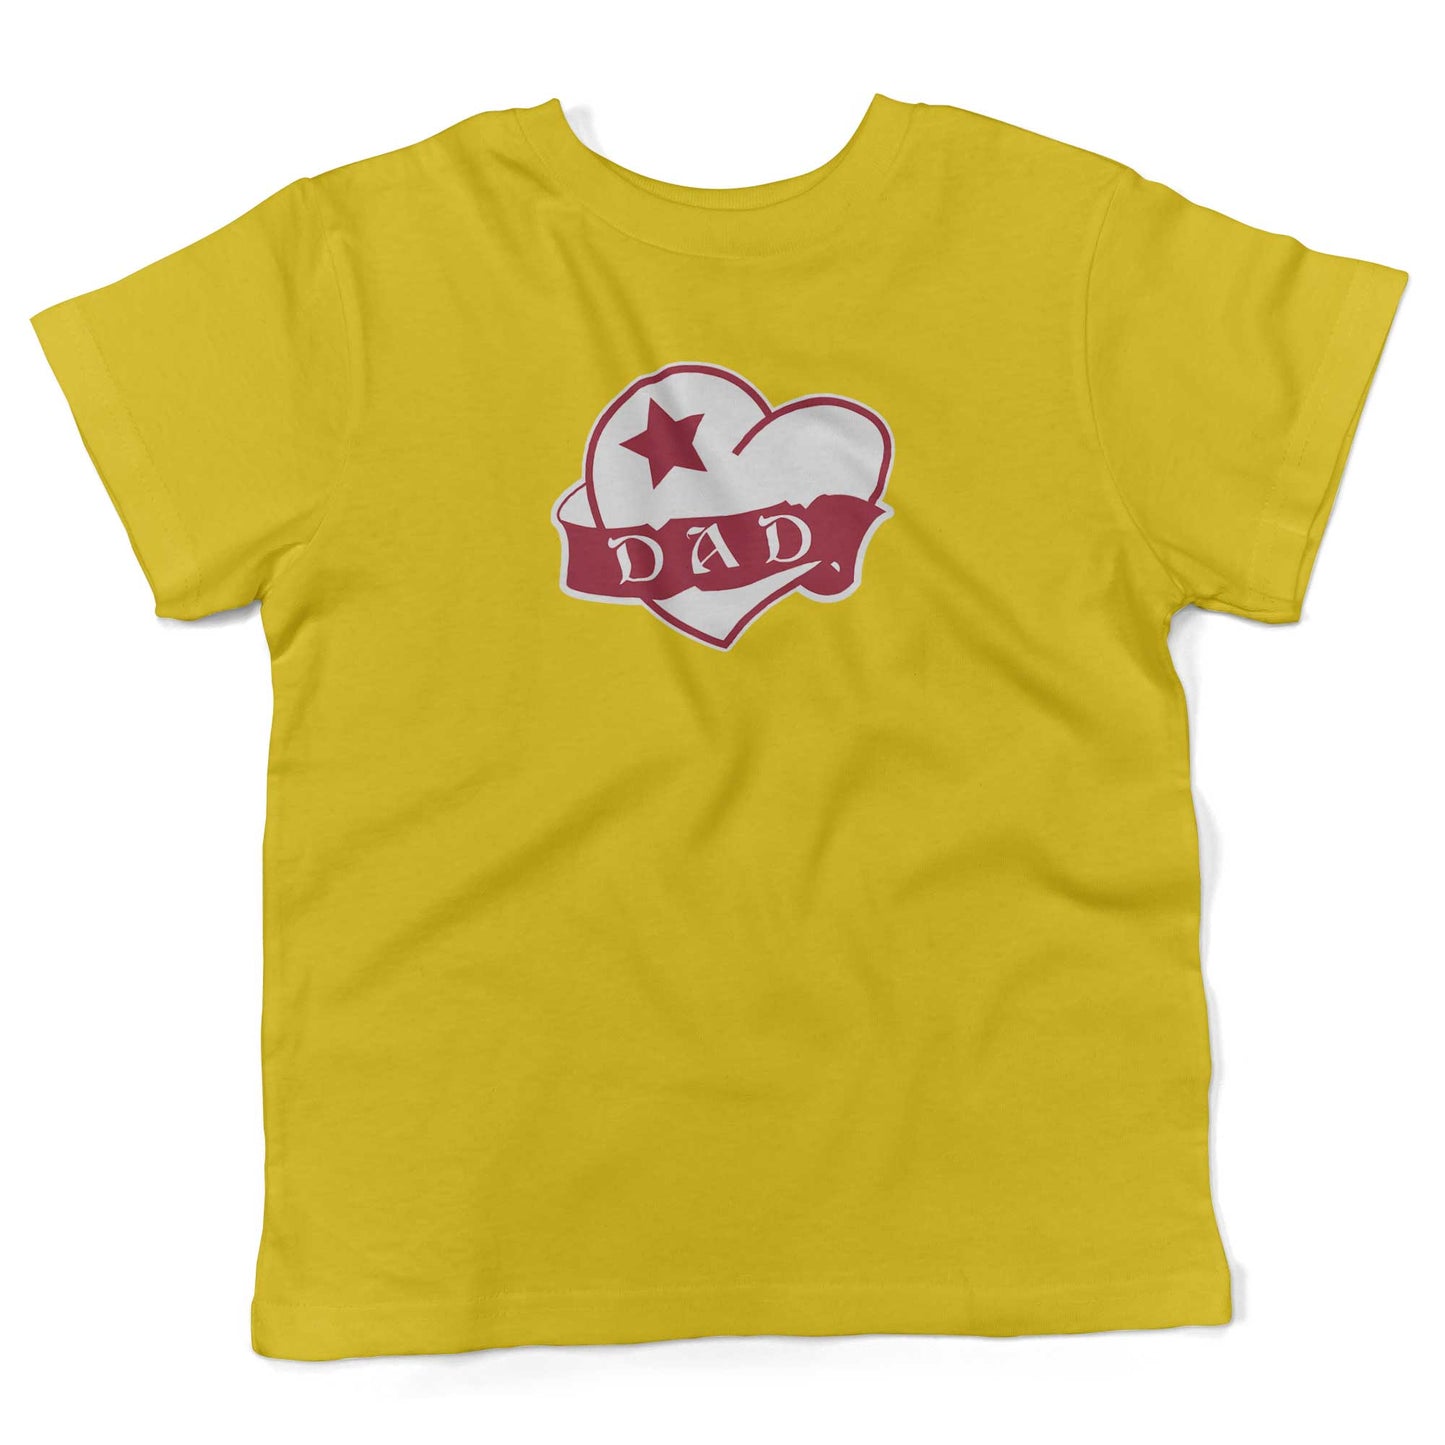 Dad Tattoo Heart Toddler Shirt-Sunshine Yellow-2T